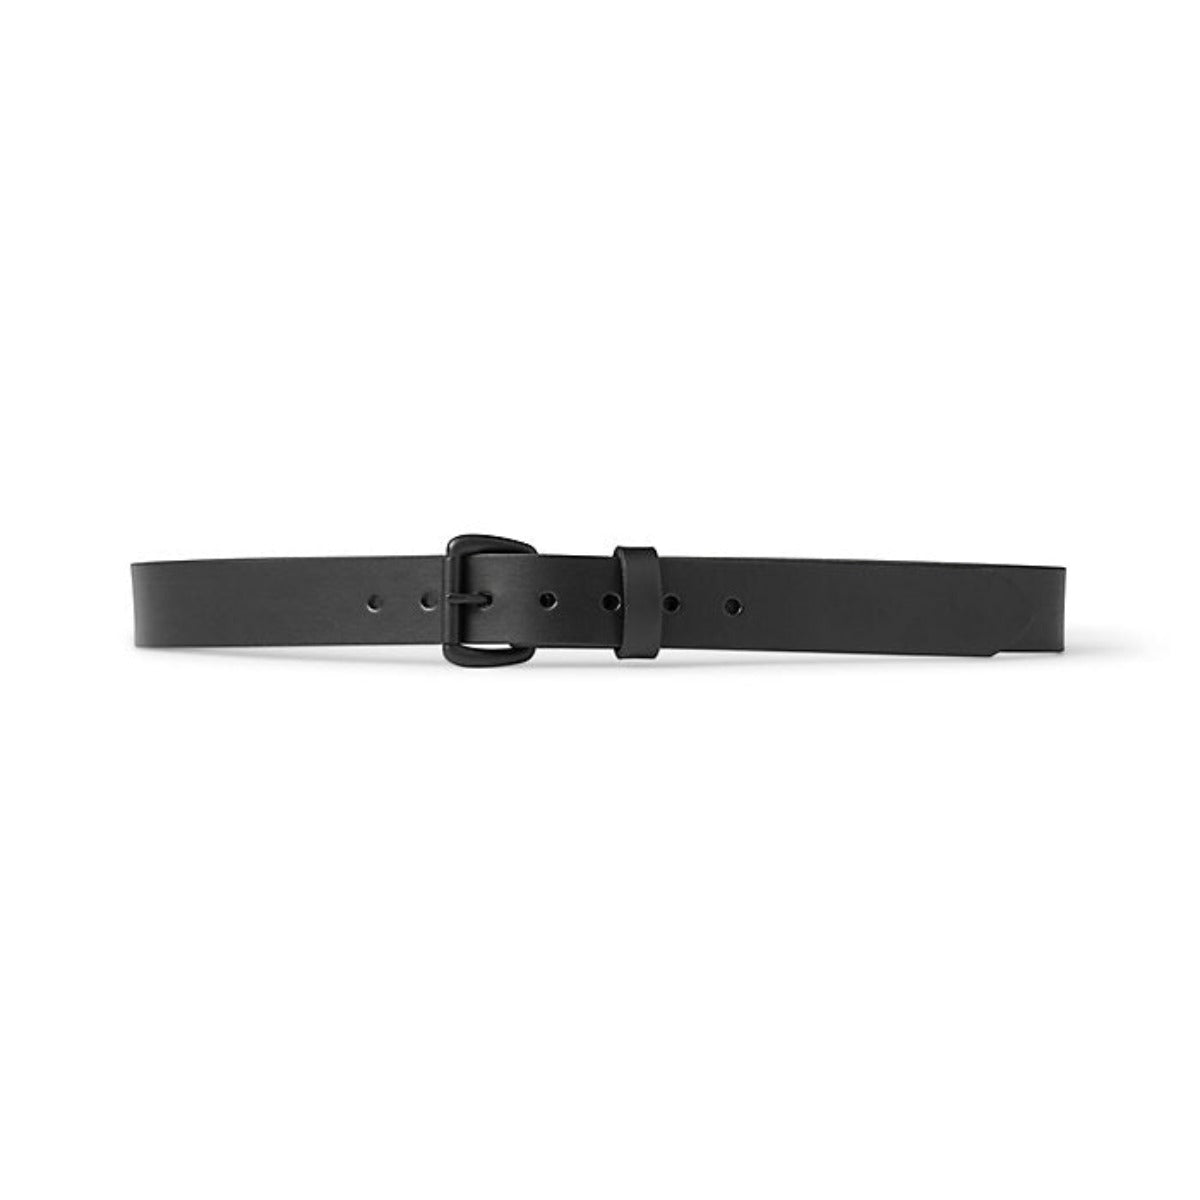 1 1/4" Leather Belt | Black